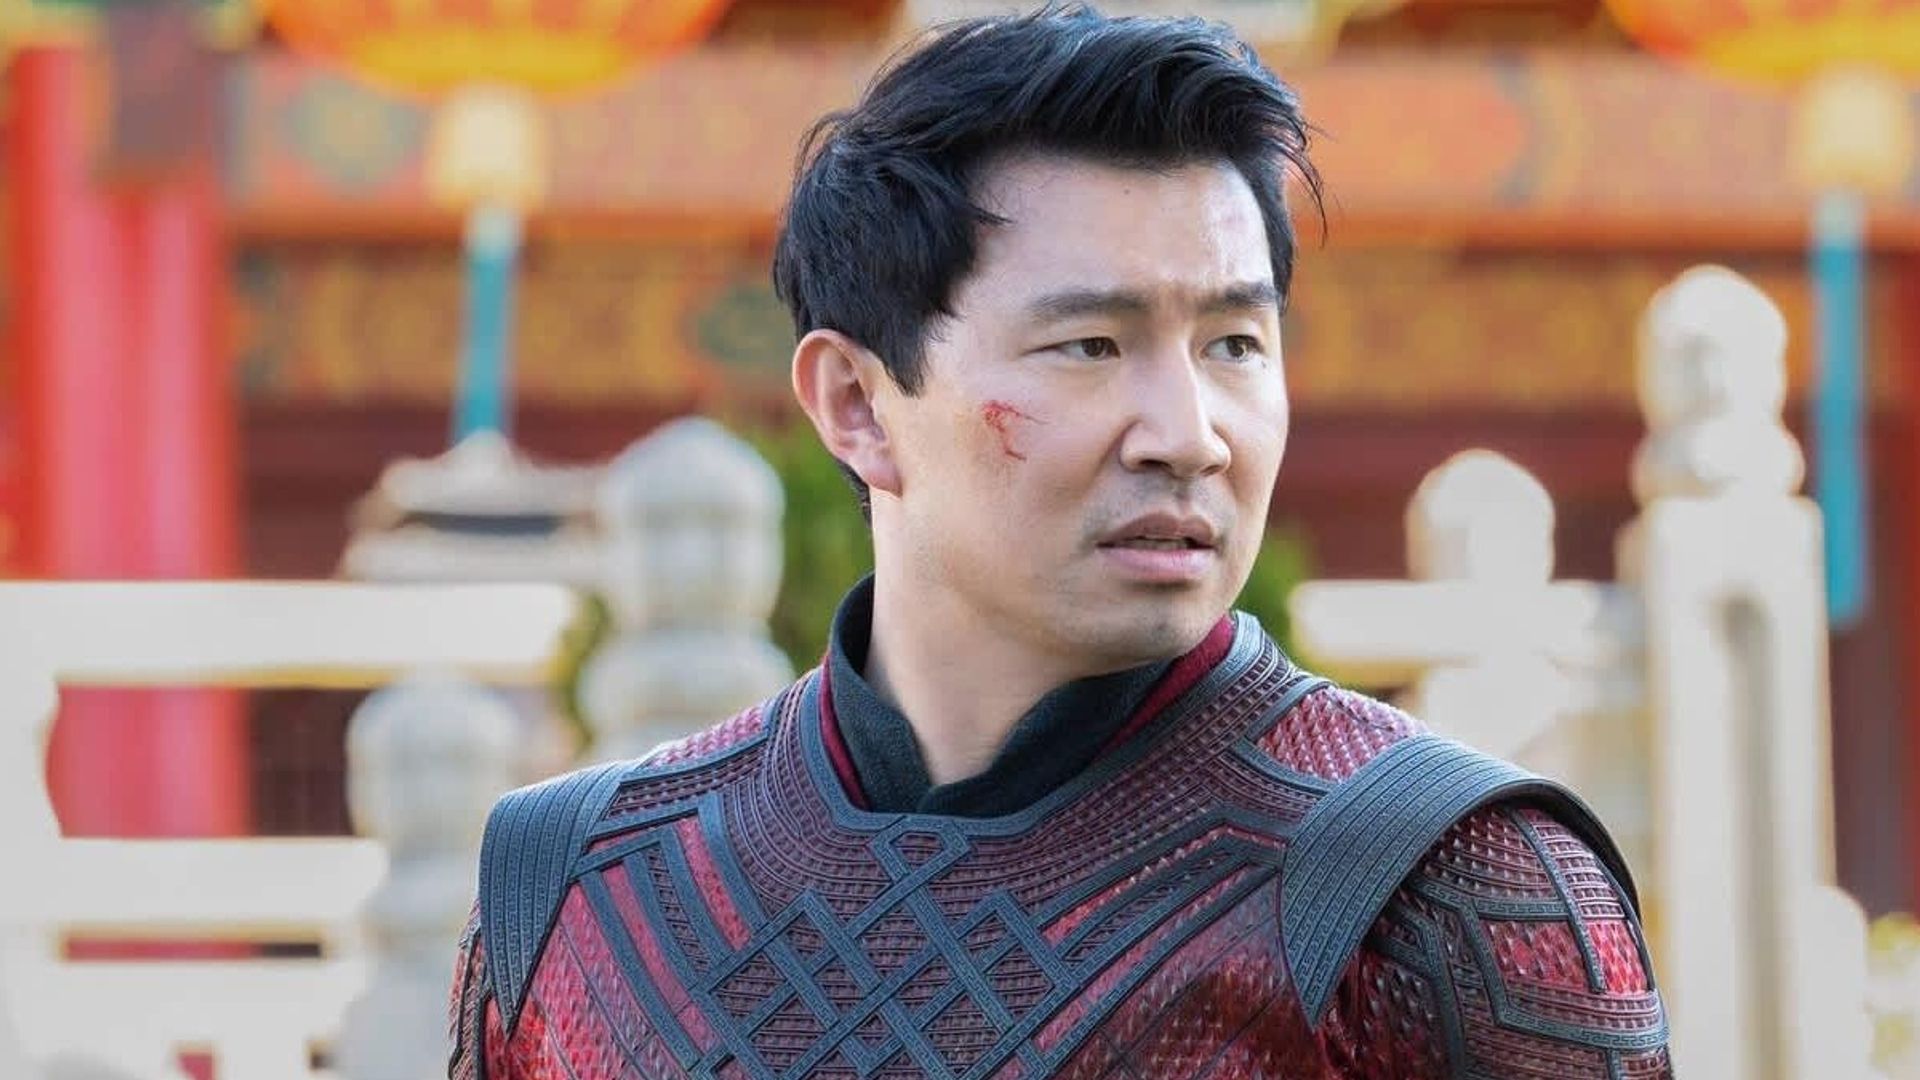 Shang-Chi' Star Simu Liu on Marvel's First Asian-Led Superhero Movie